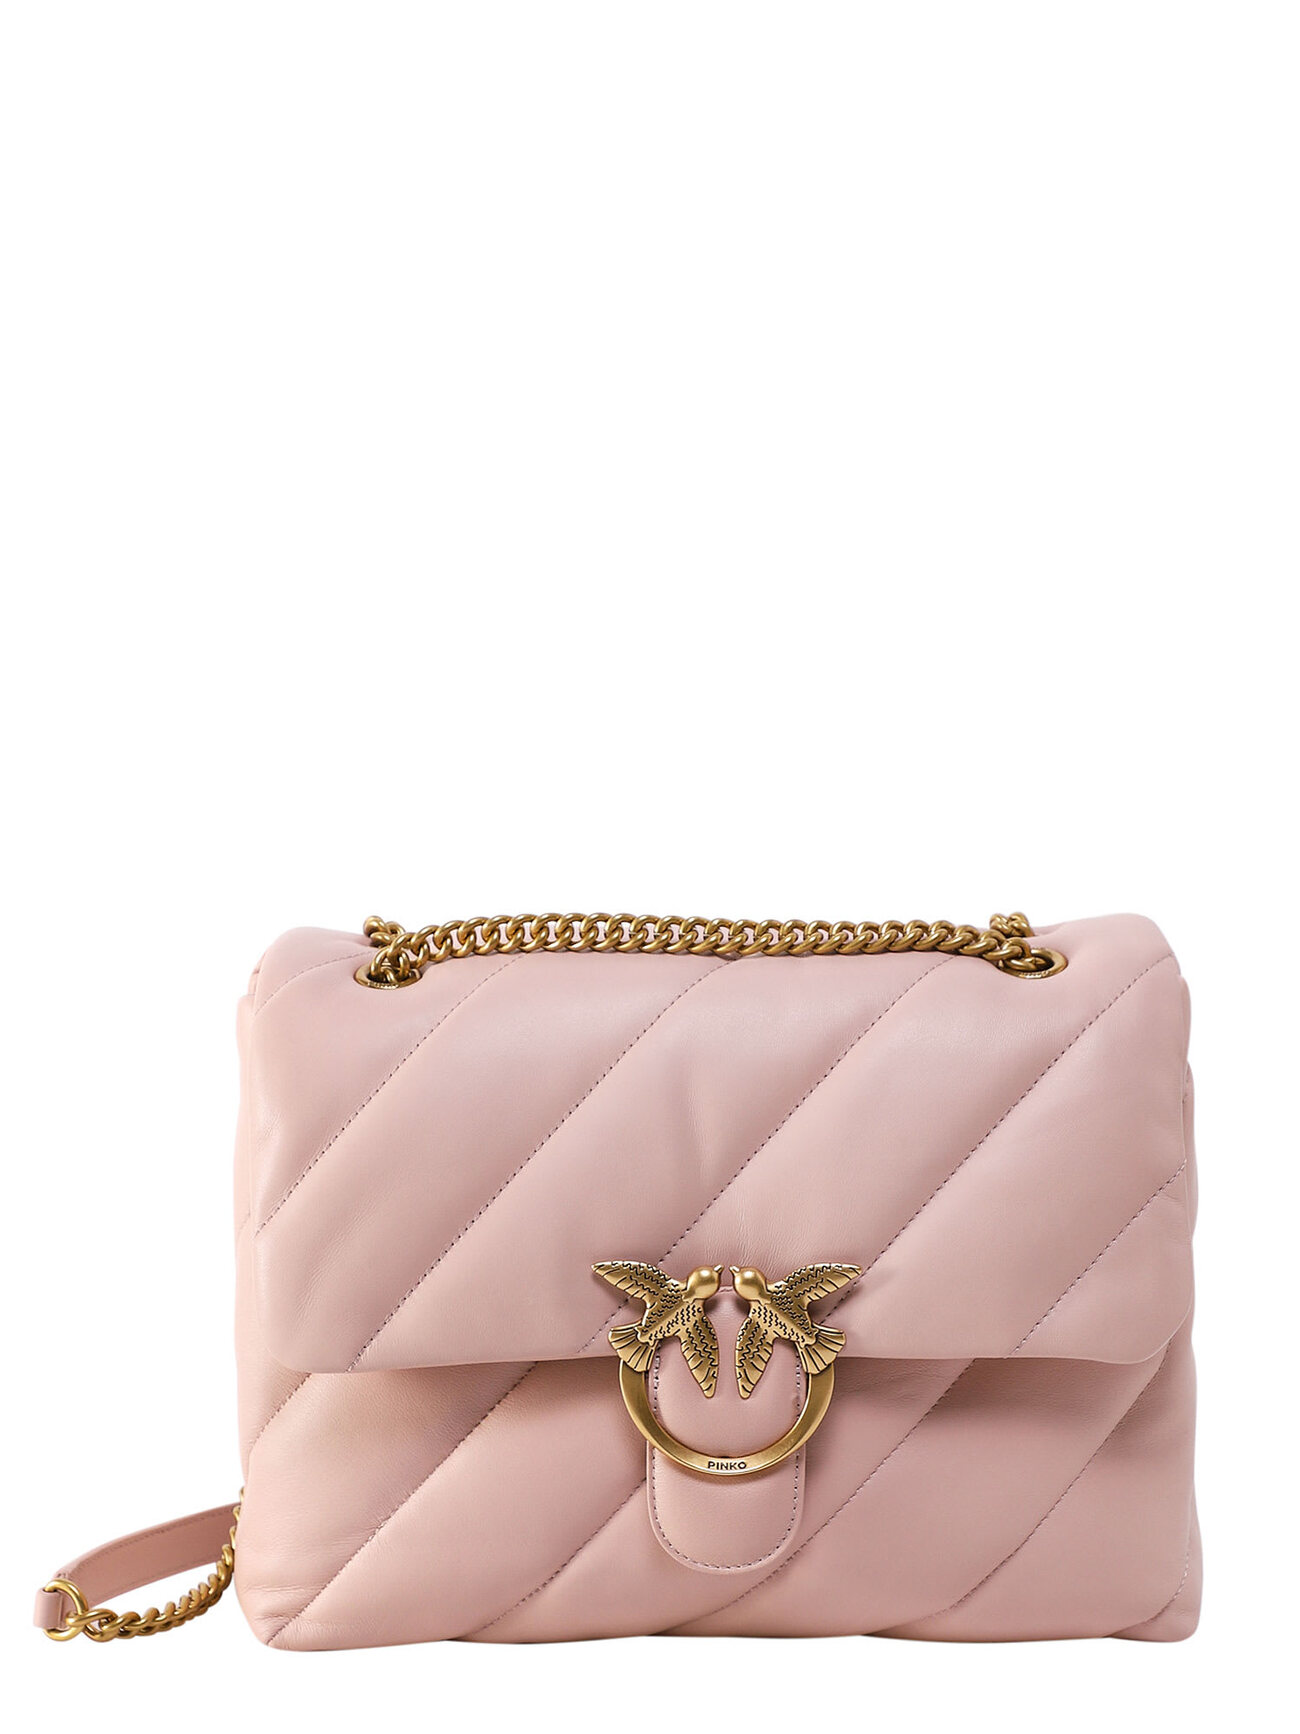 Pinko Shoulder Bag in pink